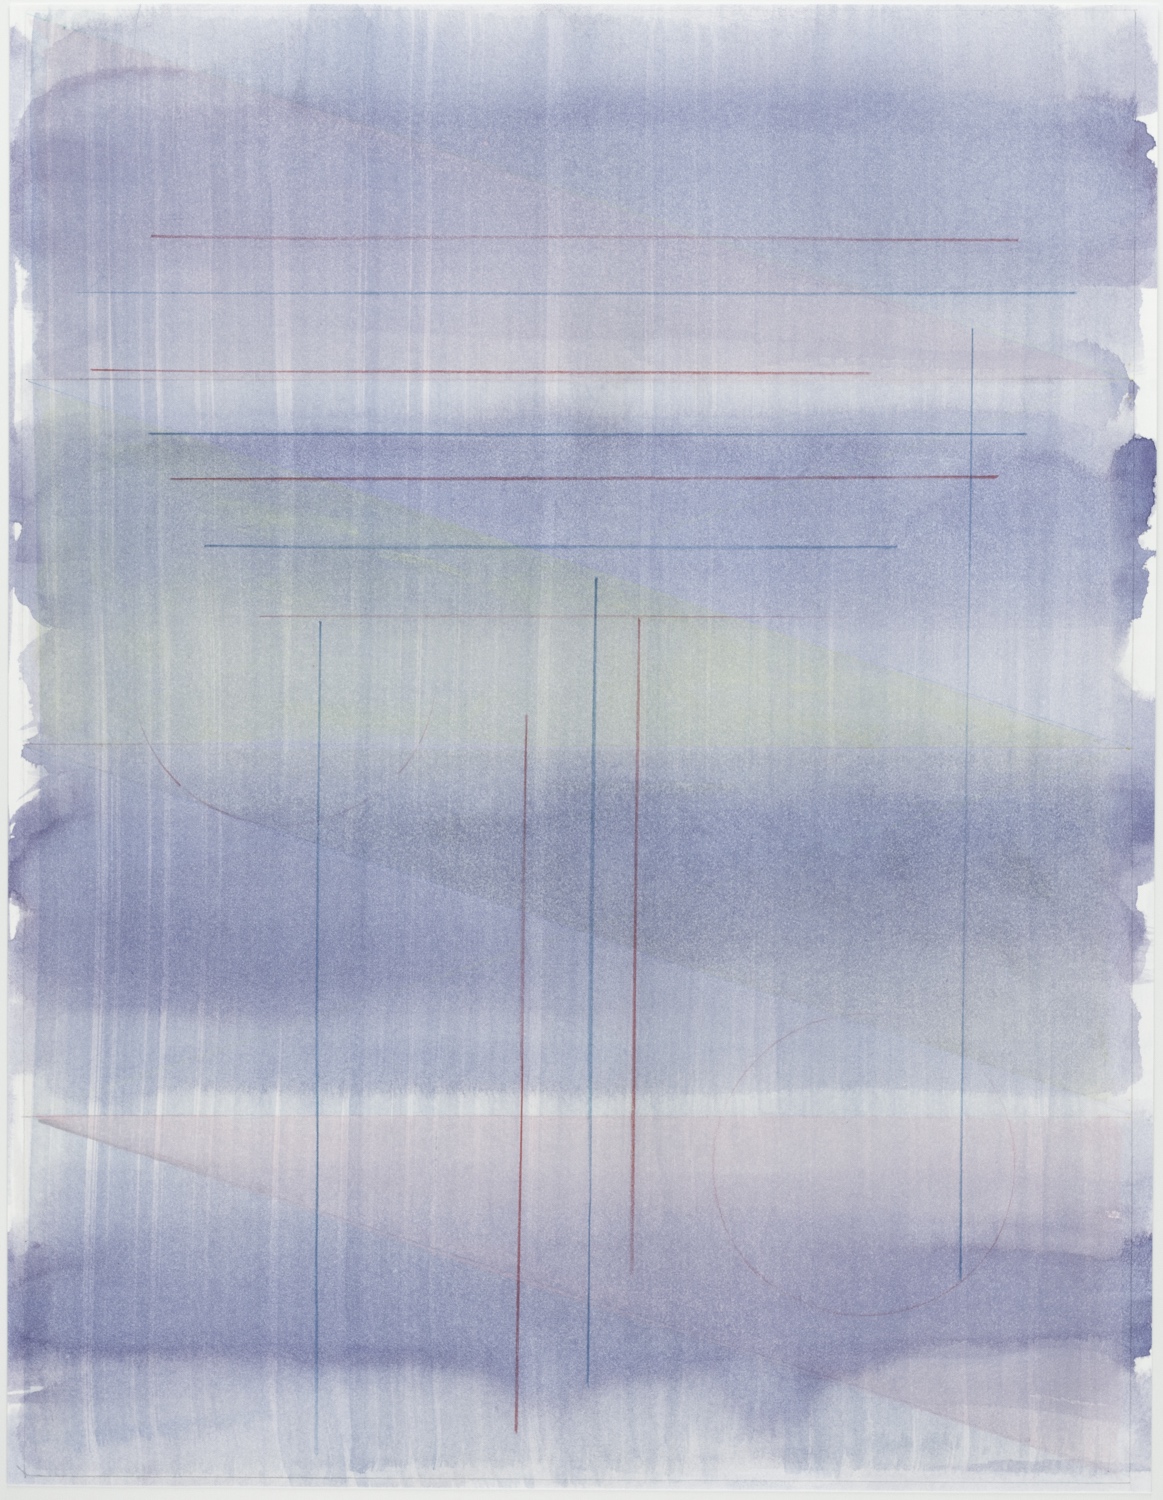 Pius Fox, Untitled (PF 14-190), watercolour and pencil on paper, 41.4 x 32 cm, 2014